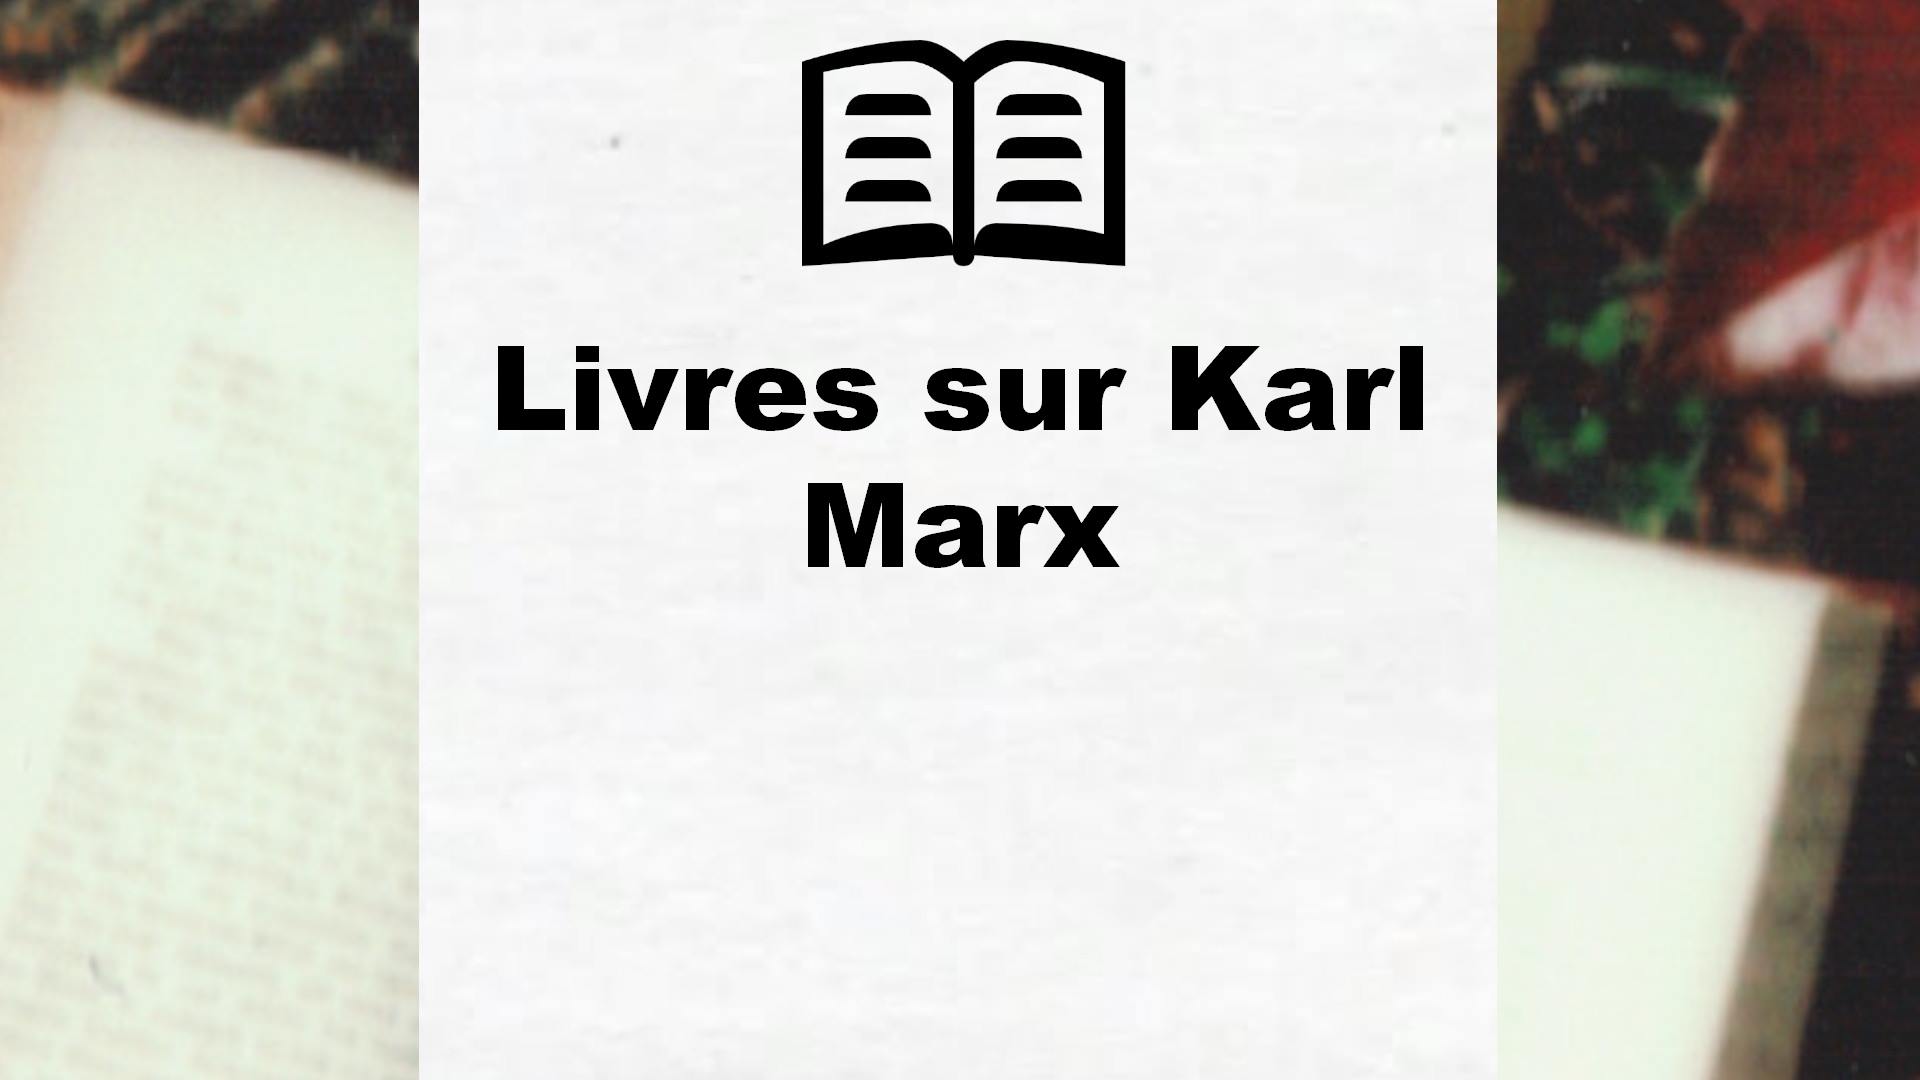 Livres sur Karl Marx